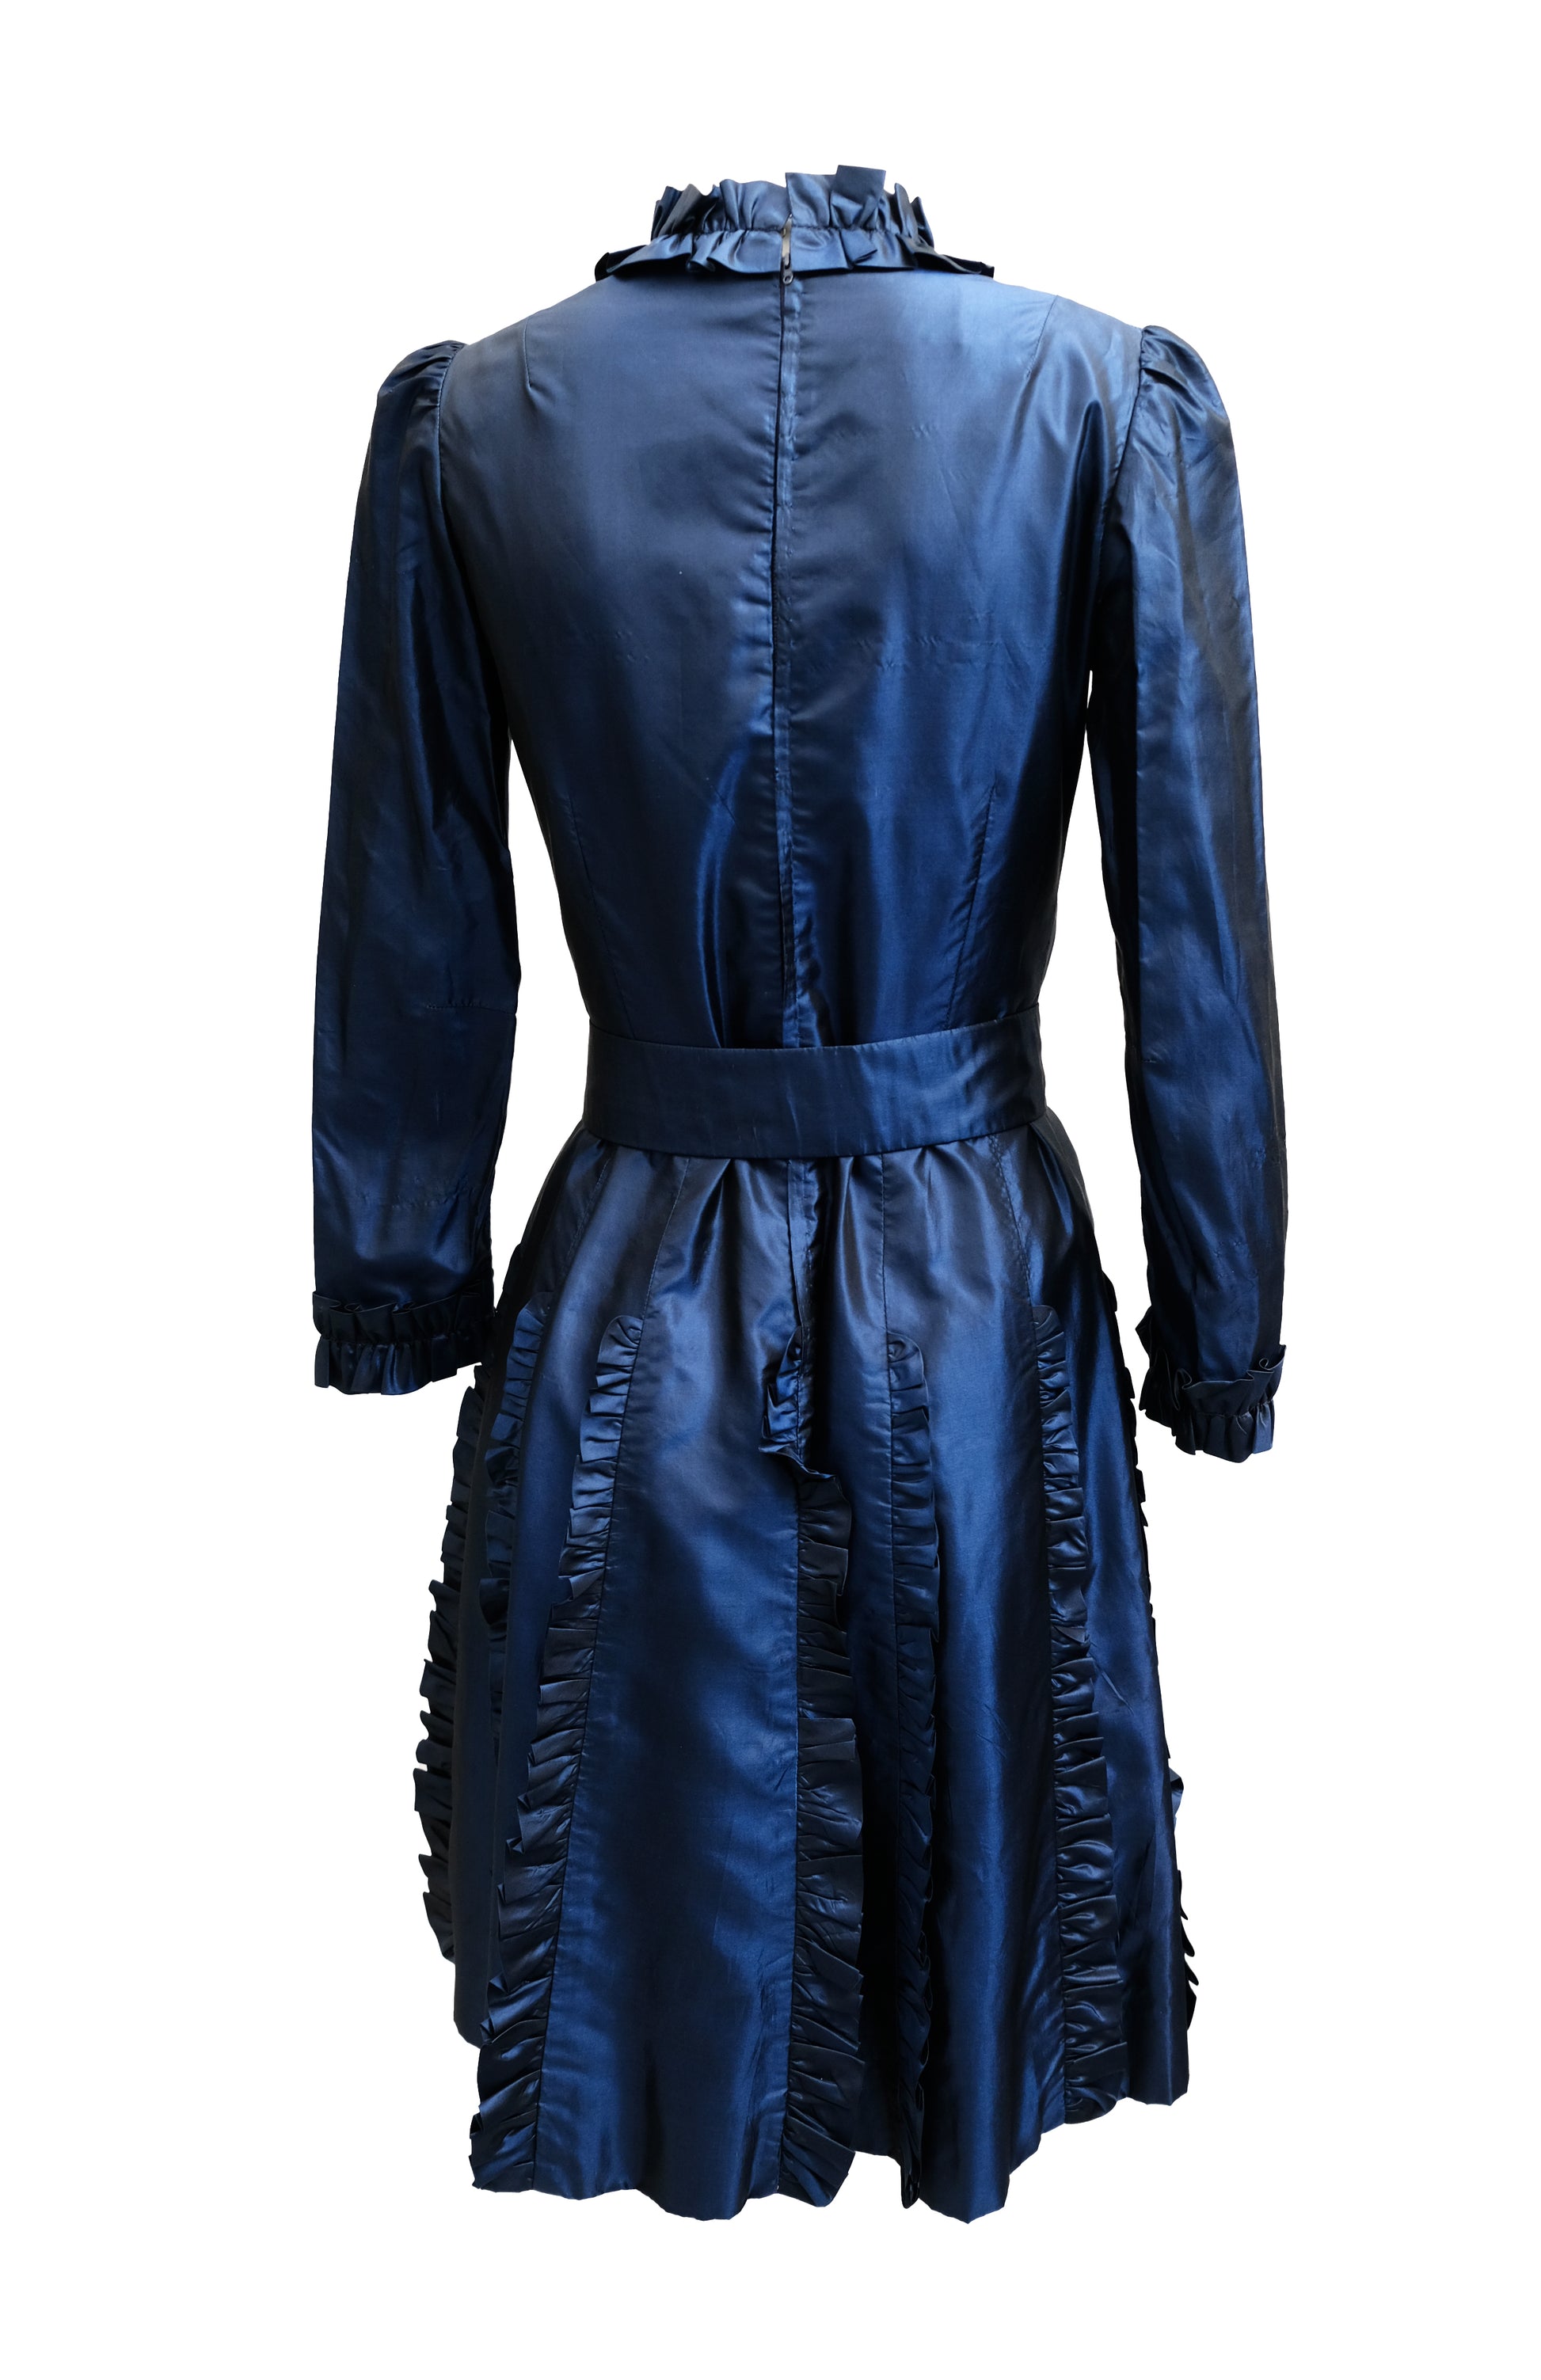 Nora Bradley Vintage Party Dress in Midnight Blue Taffeta, UK10